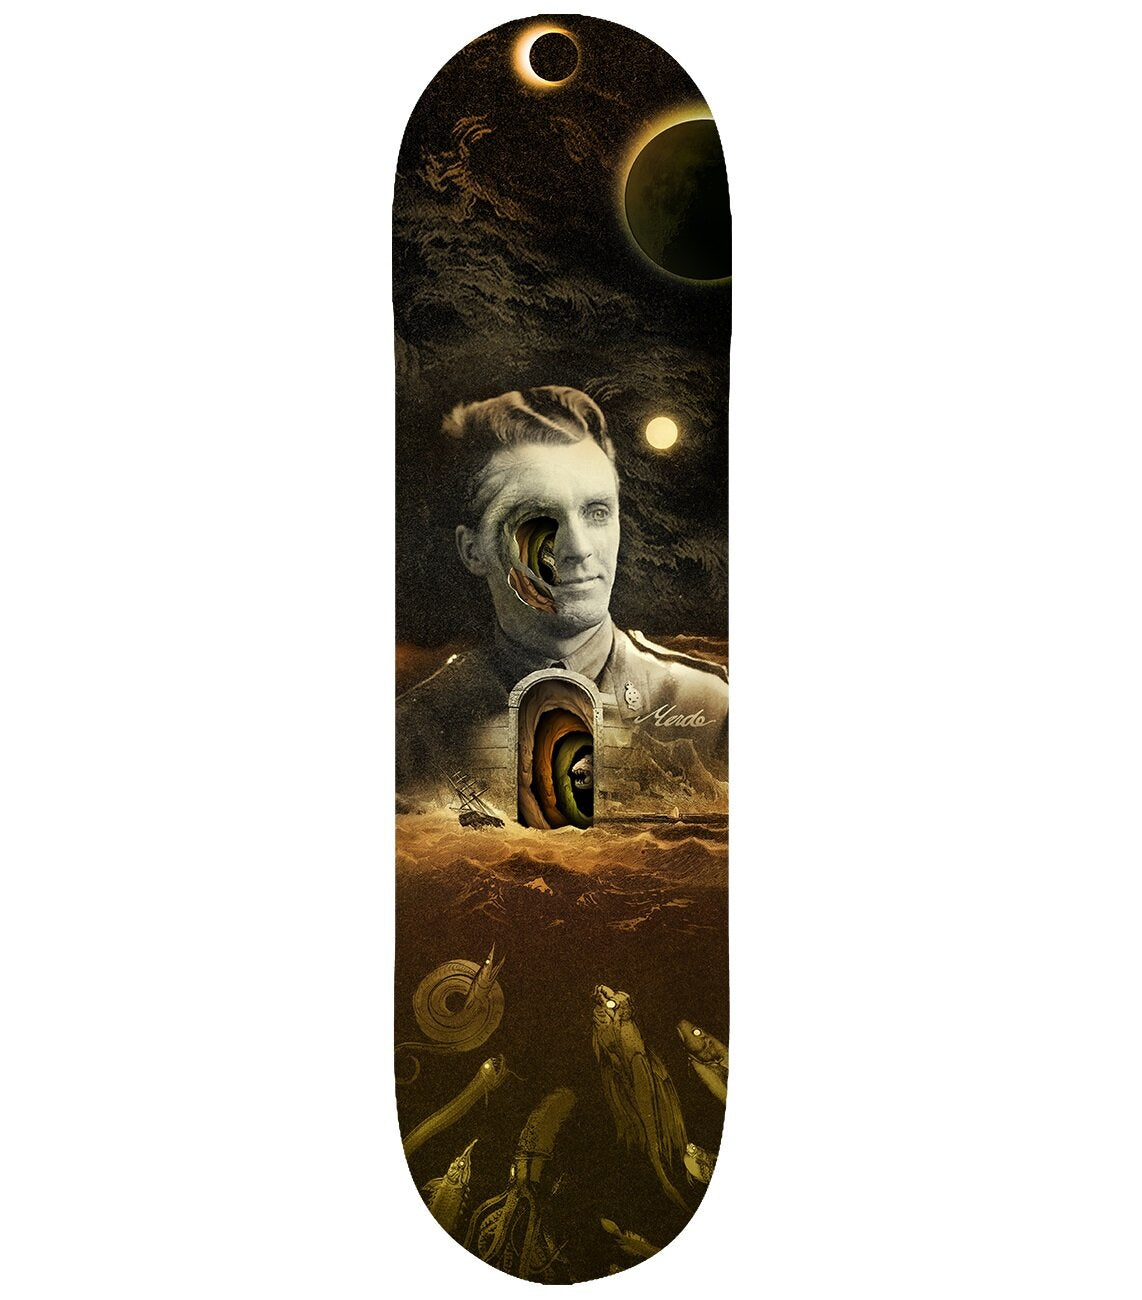 Merde Skateboards "Bastian" Assorted Sized Deck